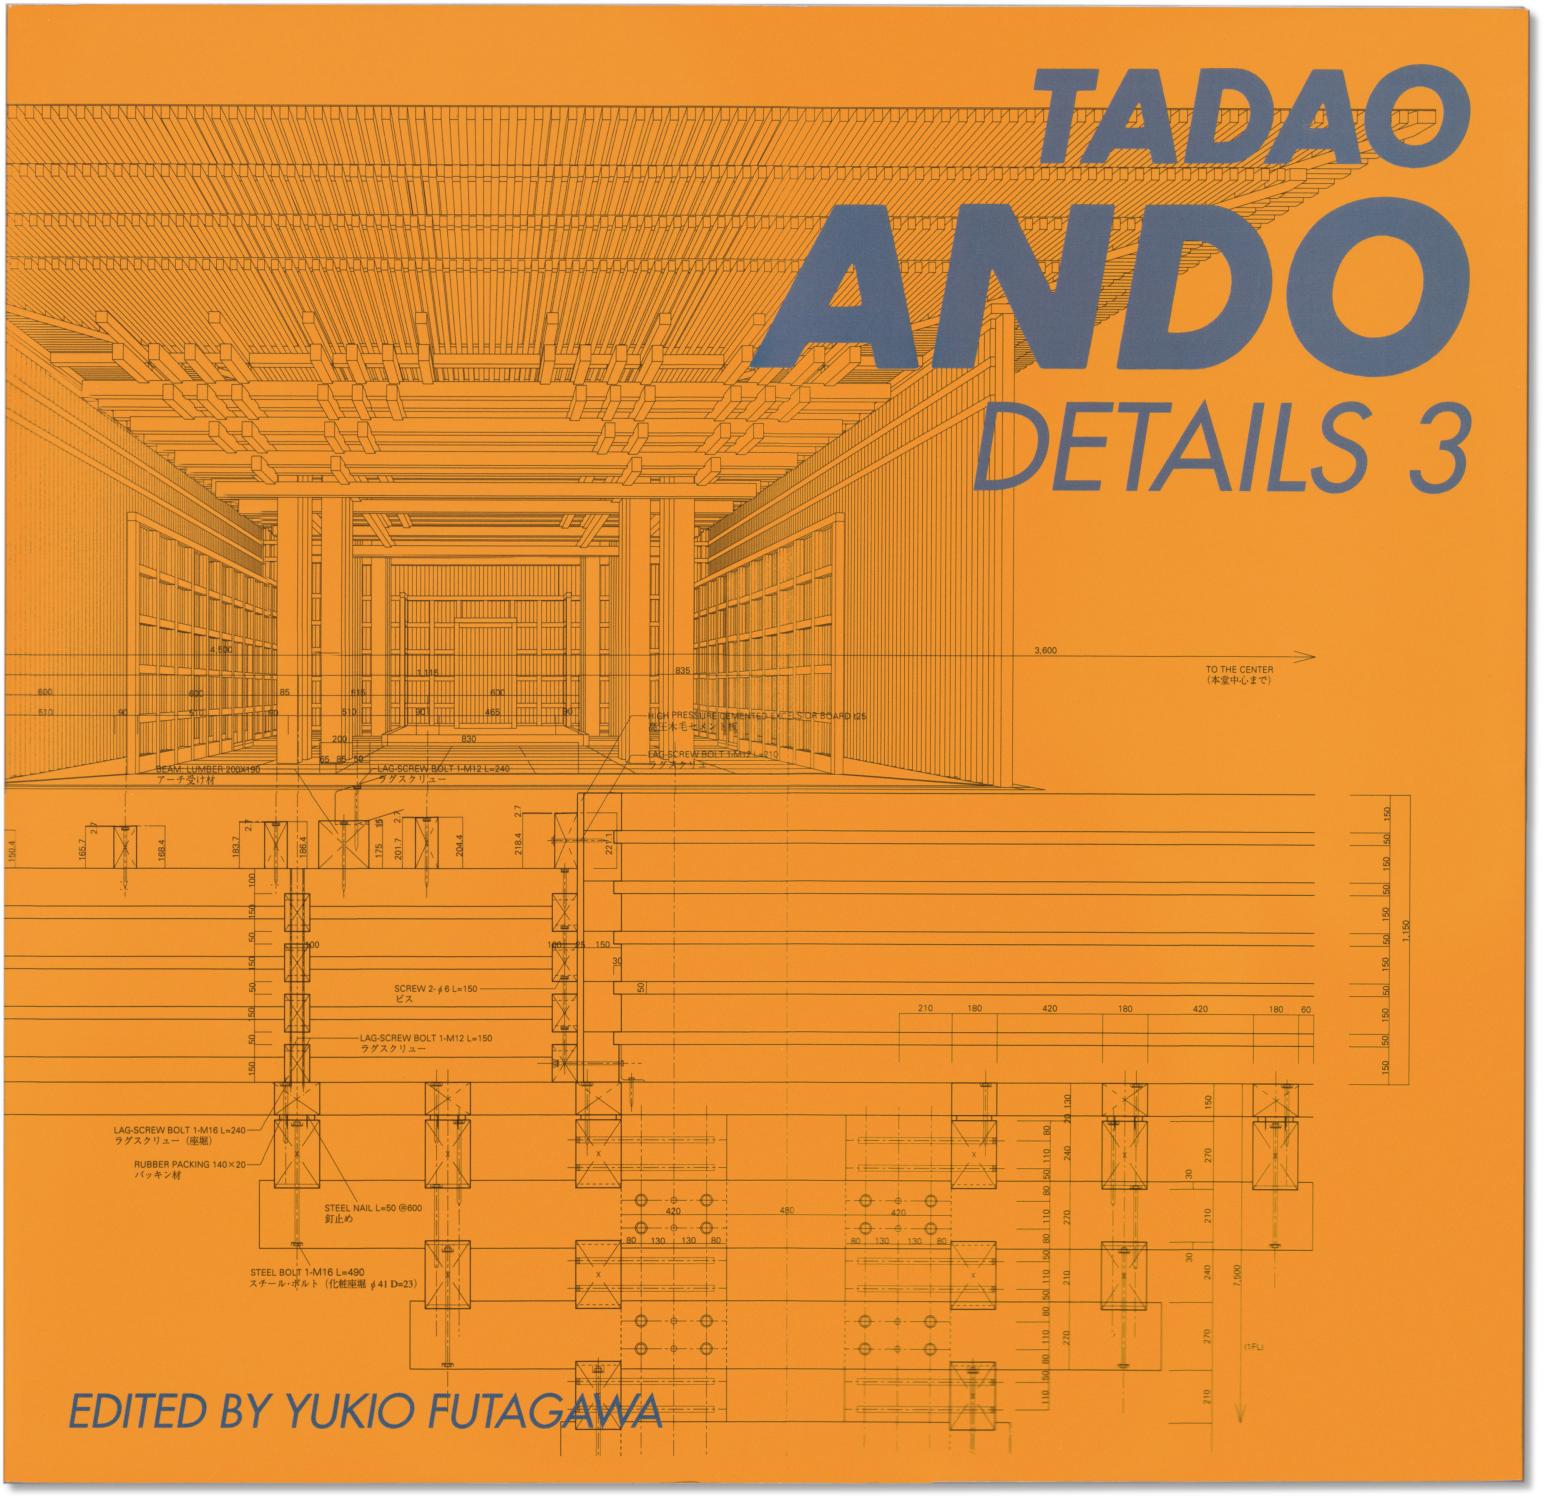 Tadao Ando: Details 3. by ANDO, Tadao. Edited by Yukio Futagawa 